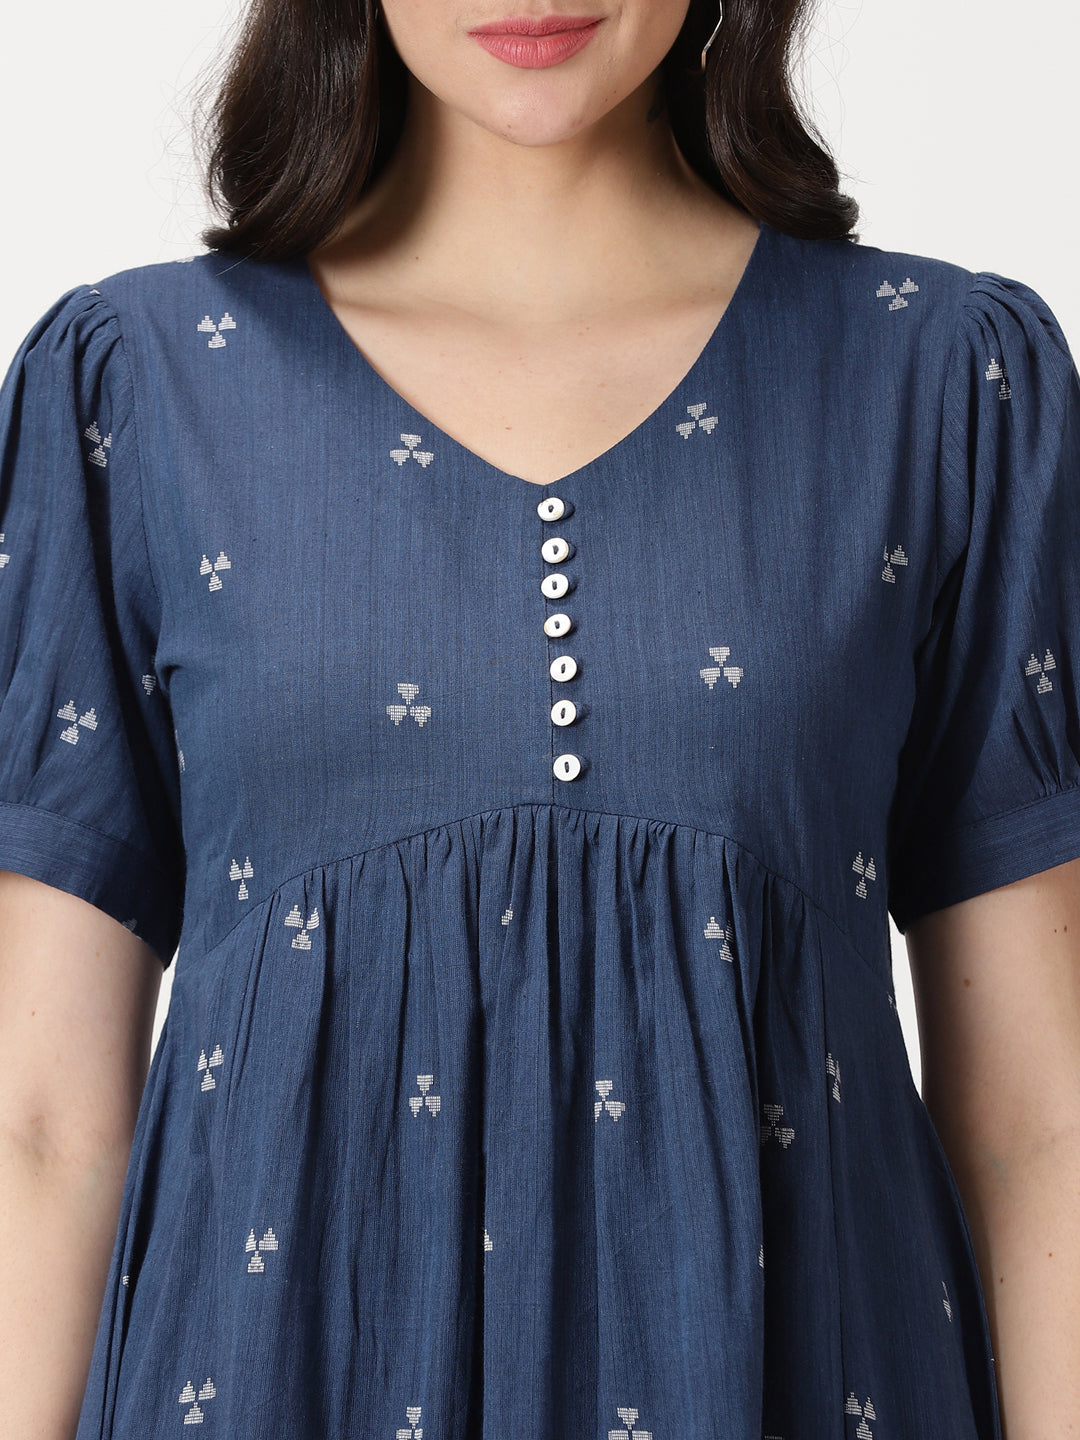 Navy Blue Woven Design Cotton Midi Dress